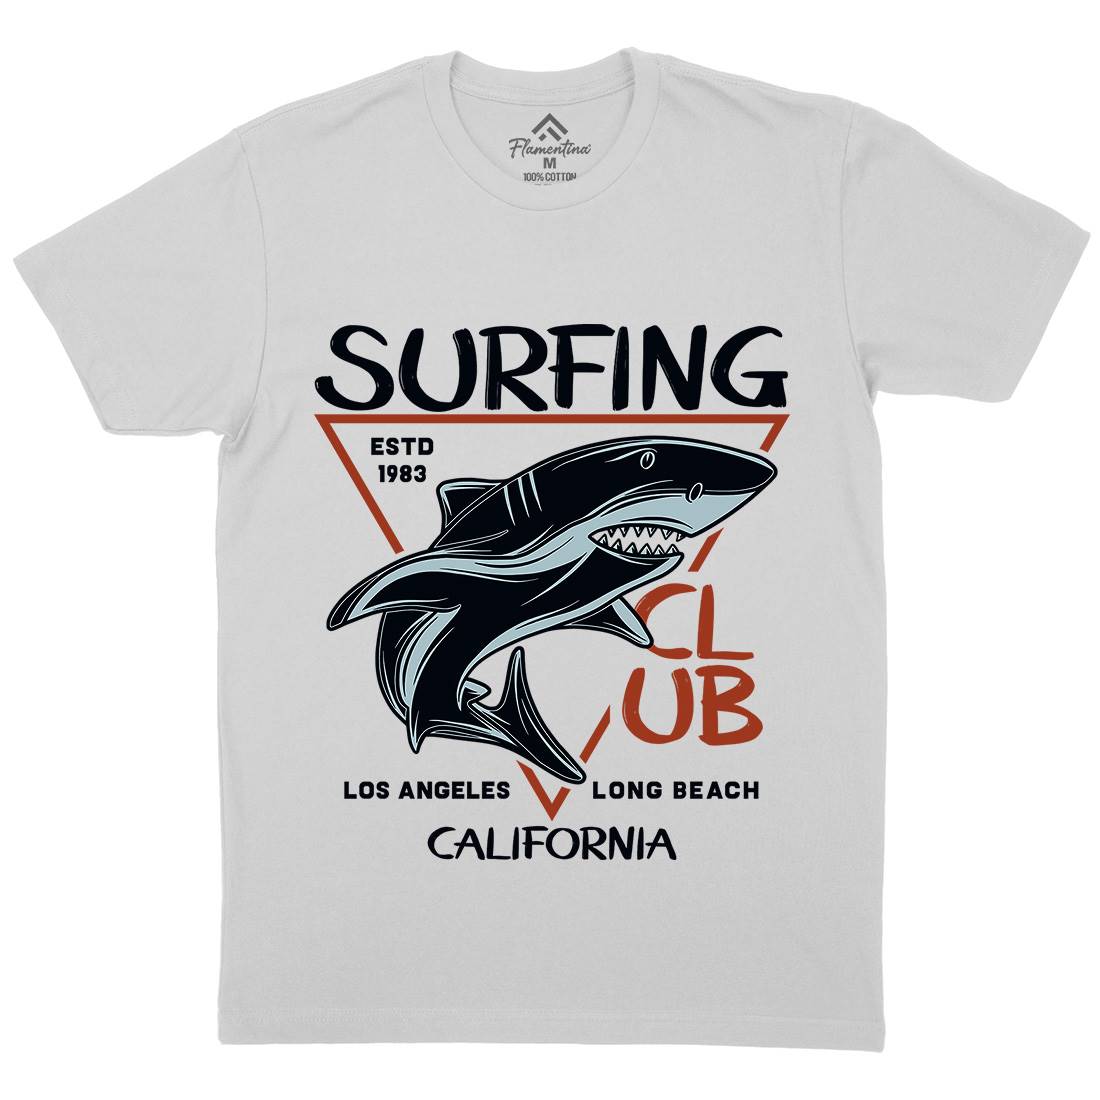 Shark Surfing Club Mens Crew Neck T-Shirt Navy D968